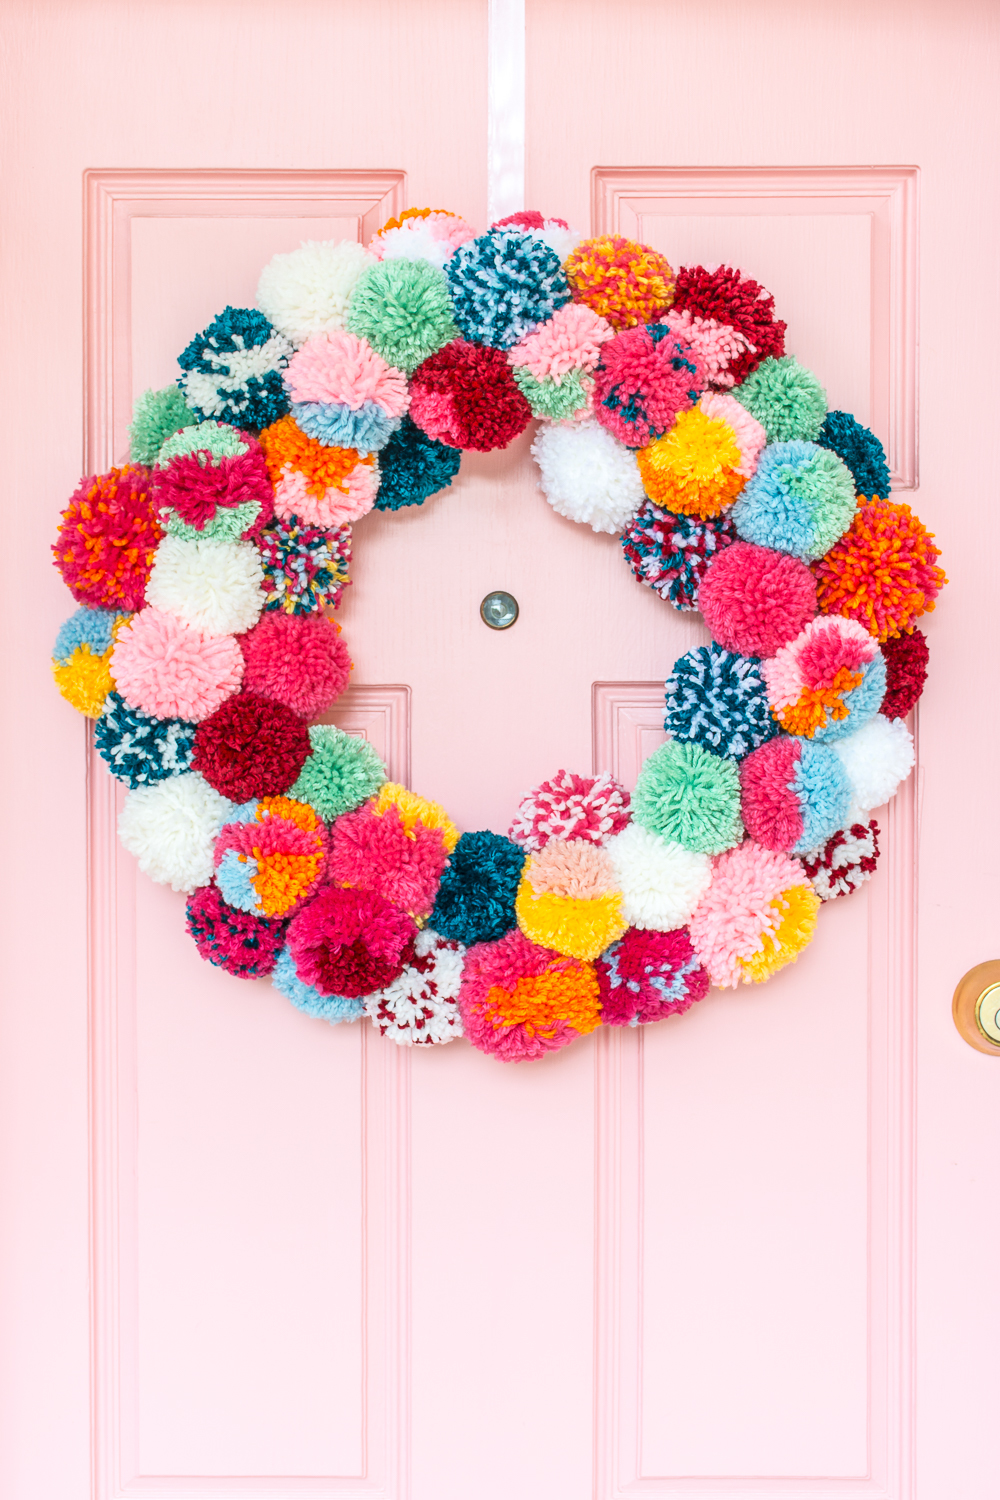 5 Minute Christmas Pom-Pom Wreath - Design Improvised